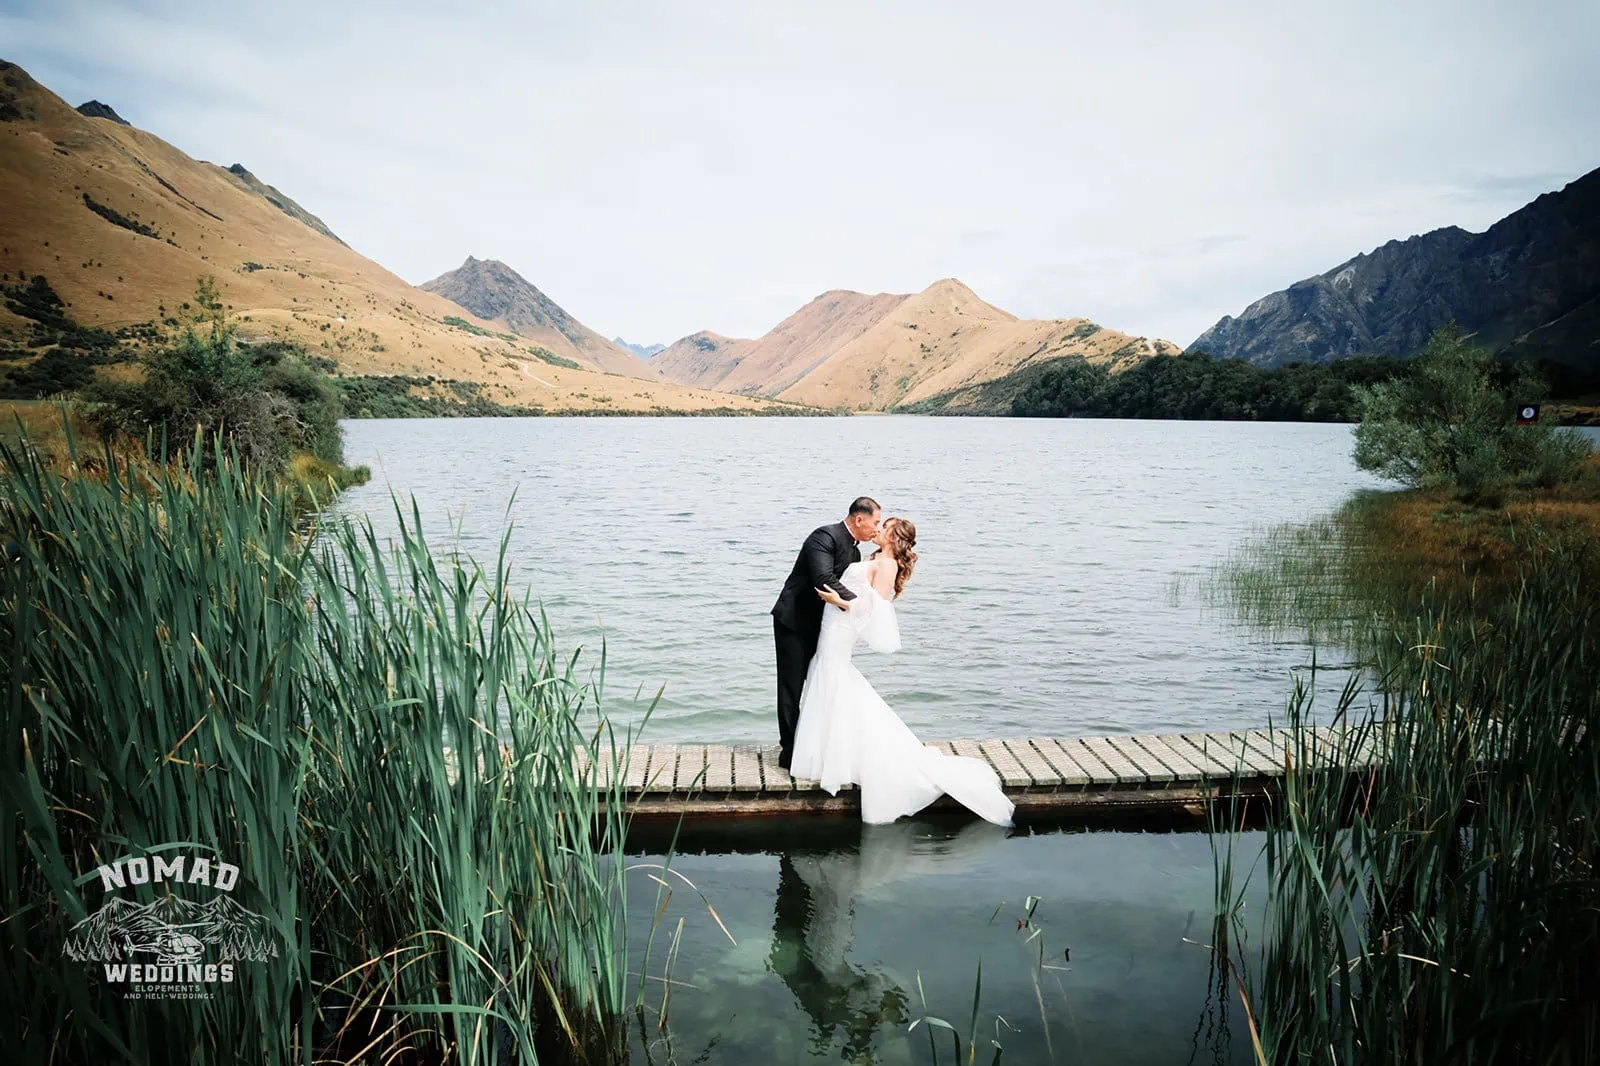 Nhi & Nicholas' pre-wedding shoot on a dock near a lake in Queenstown, New Zealand.